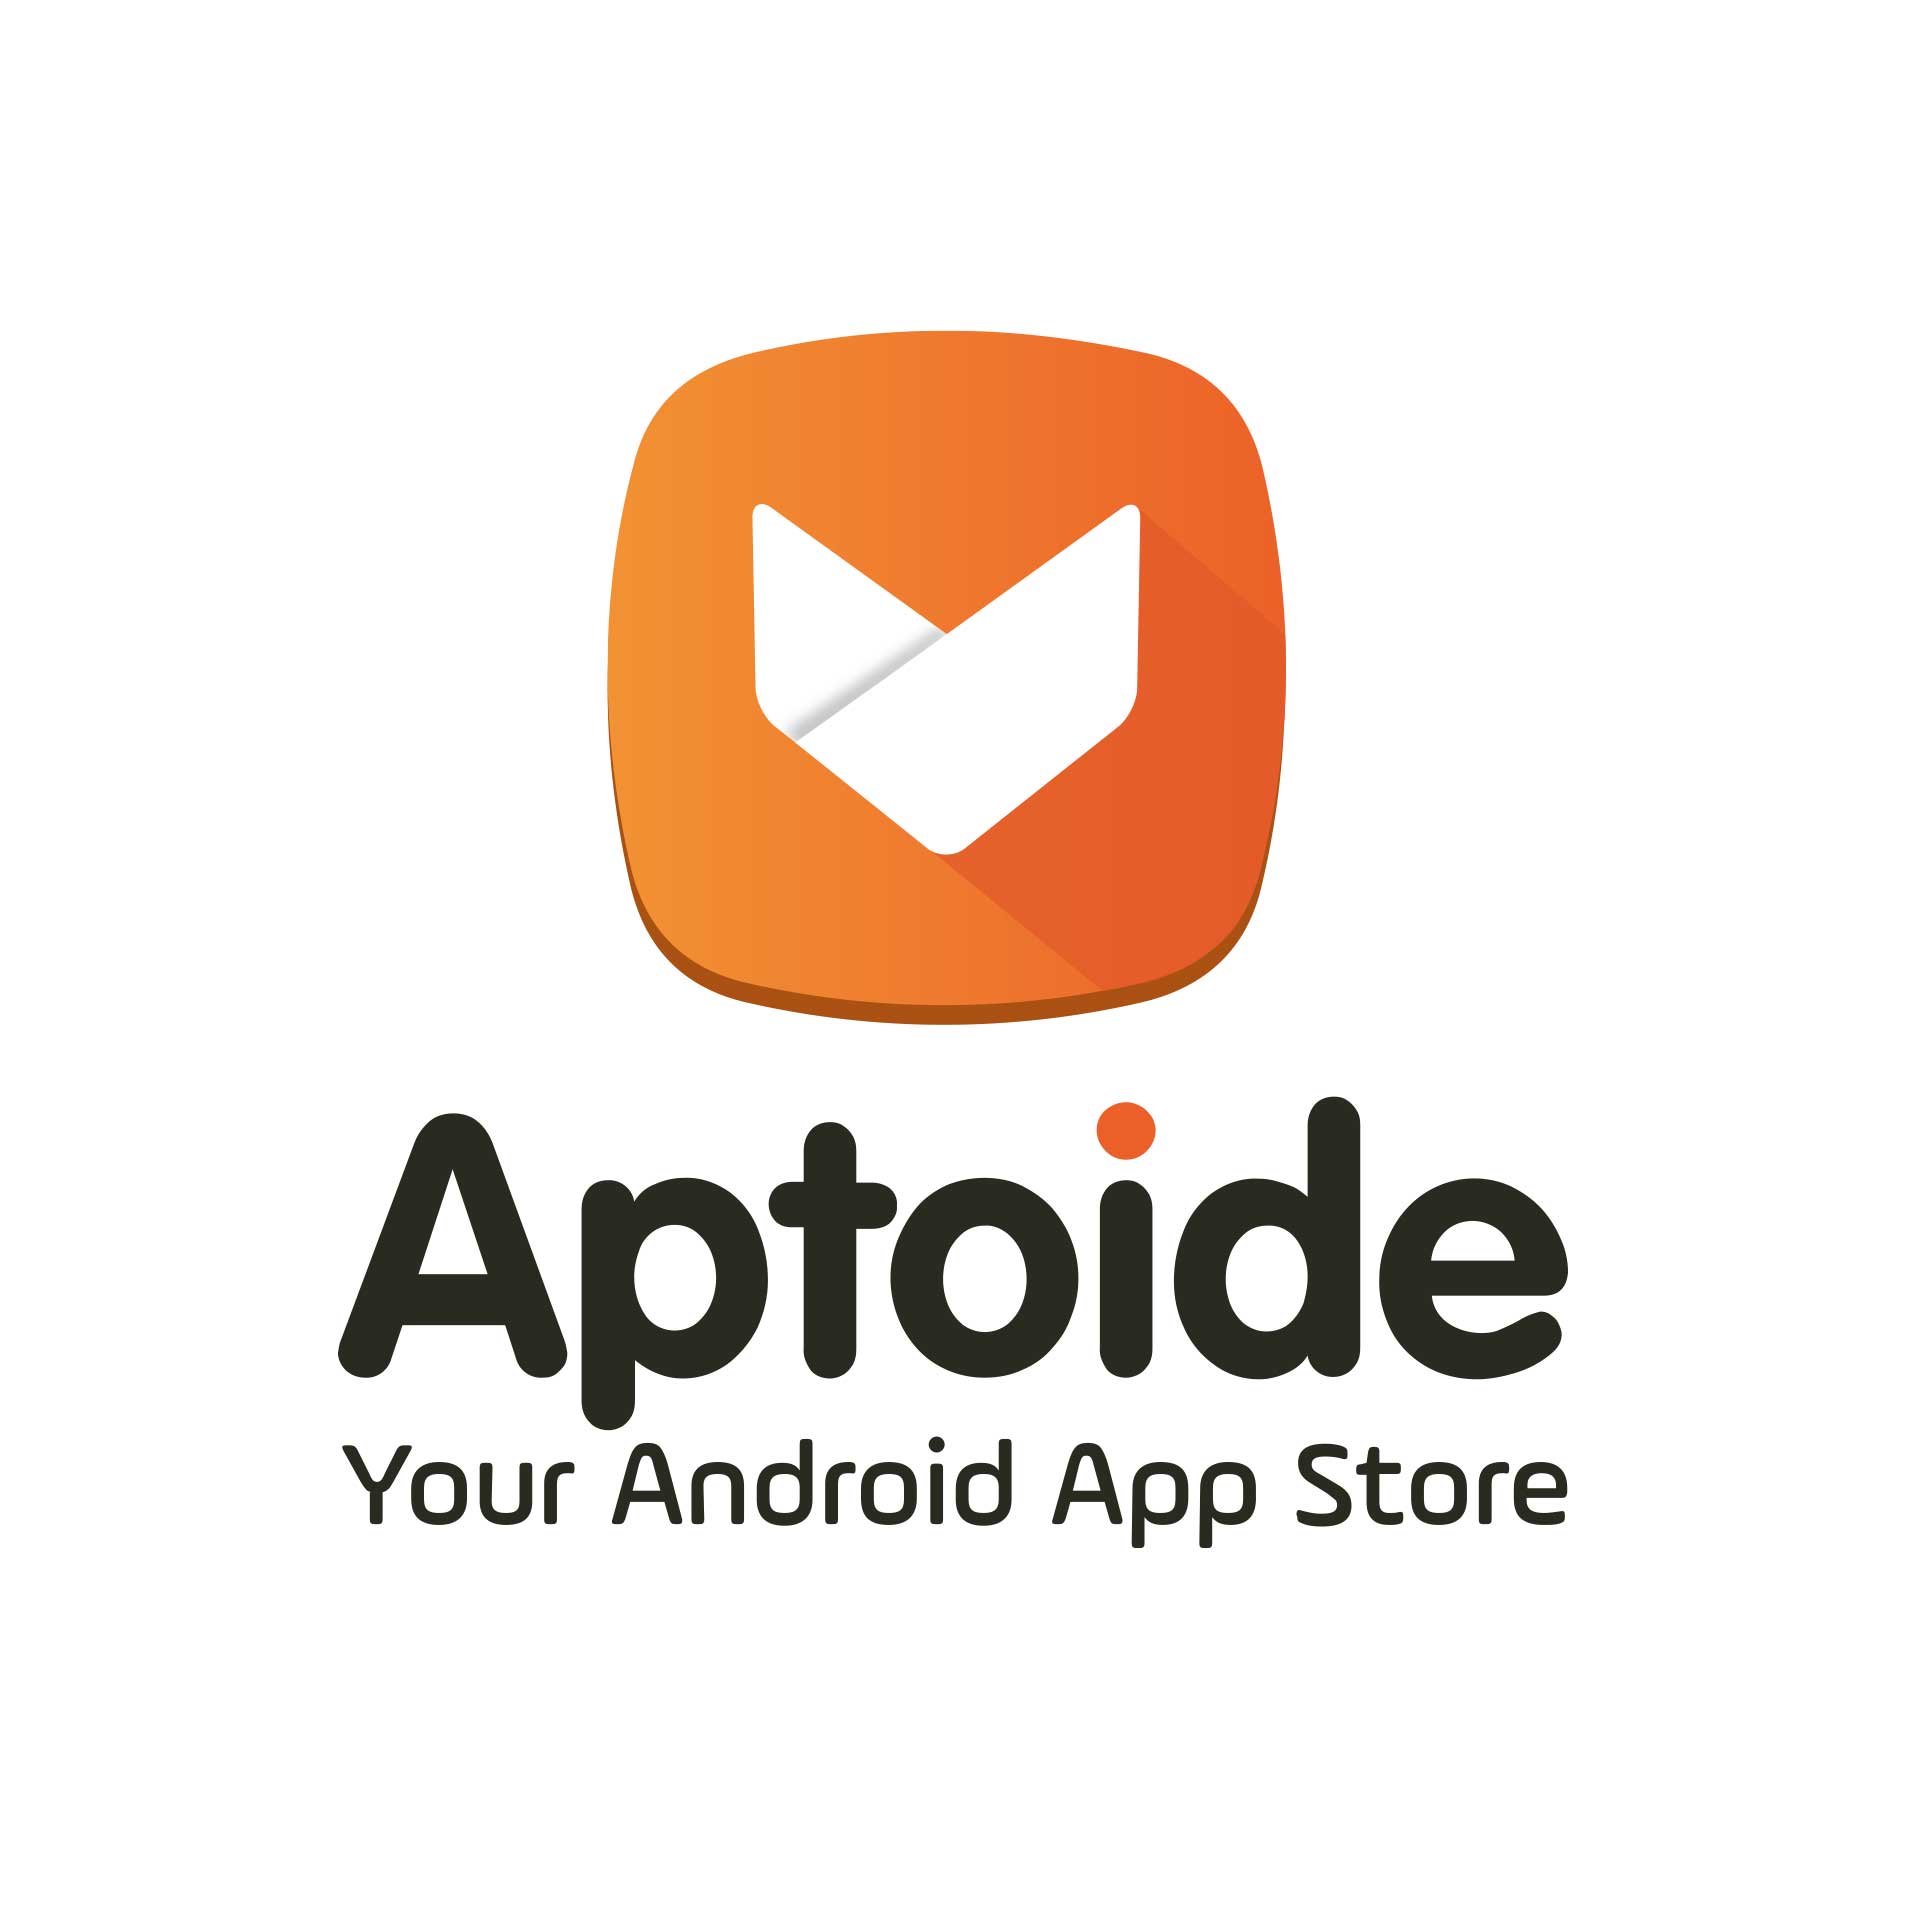 Aptoide accuses Google, Launches “Google, Play Fair!” campaign website